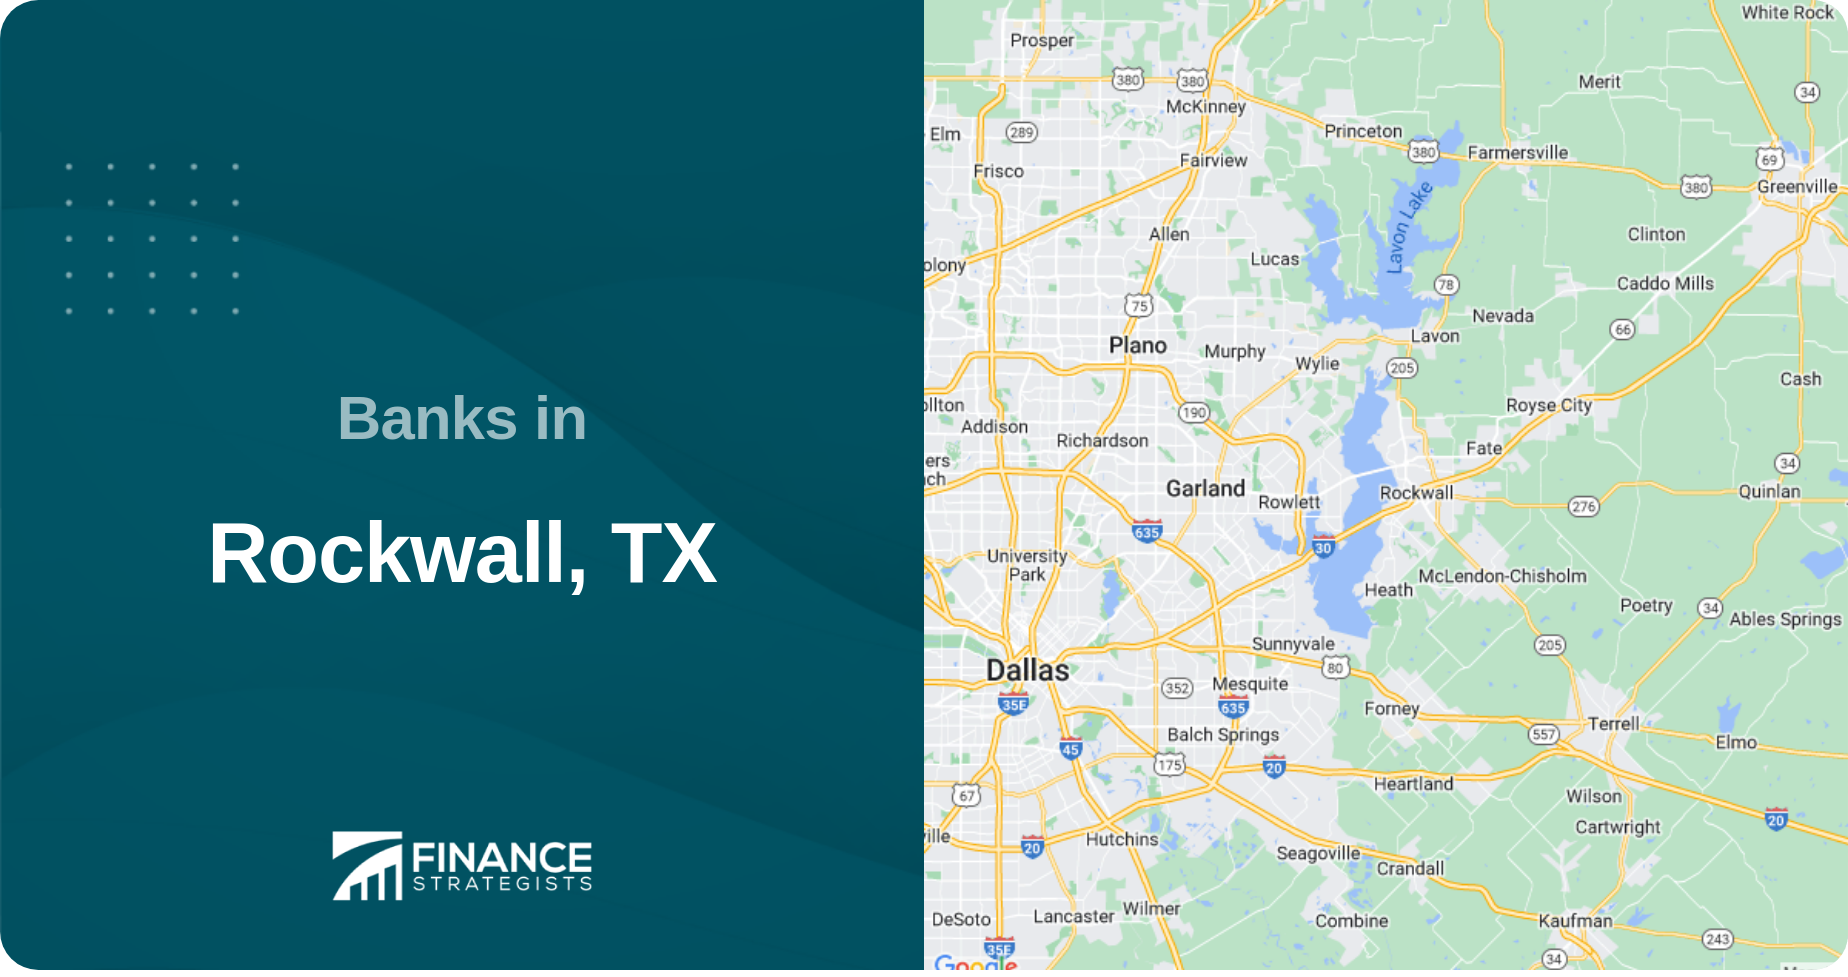 Banks in Rockwall, TX